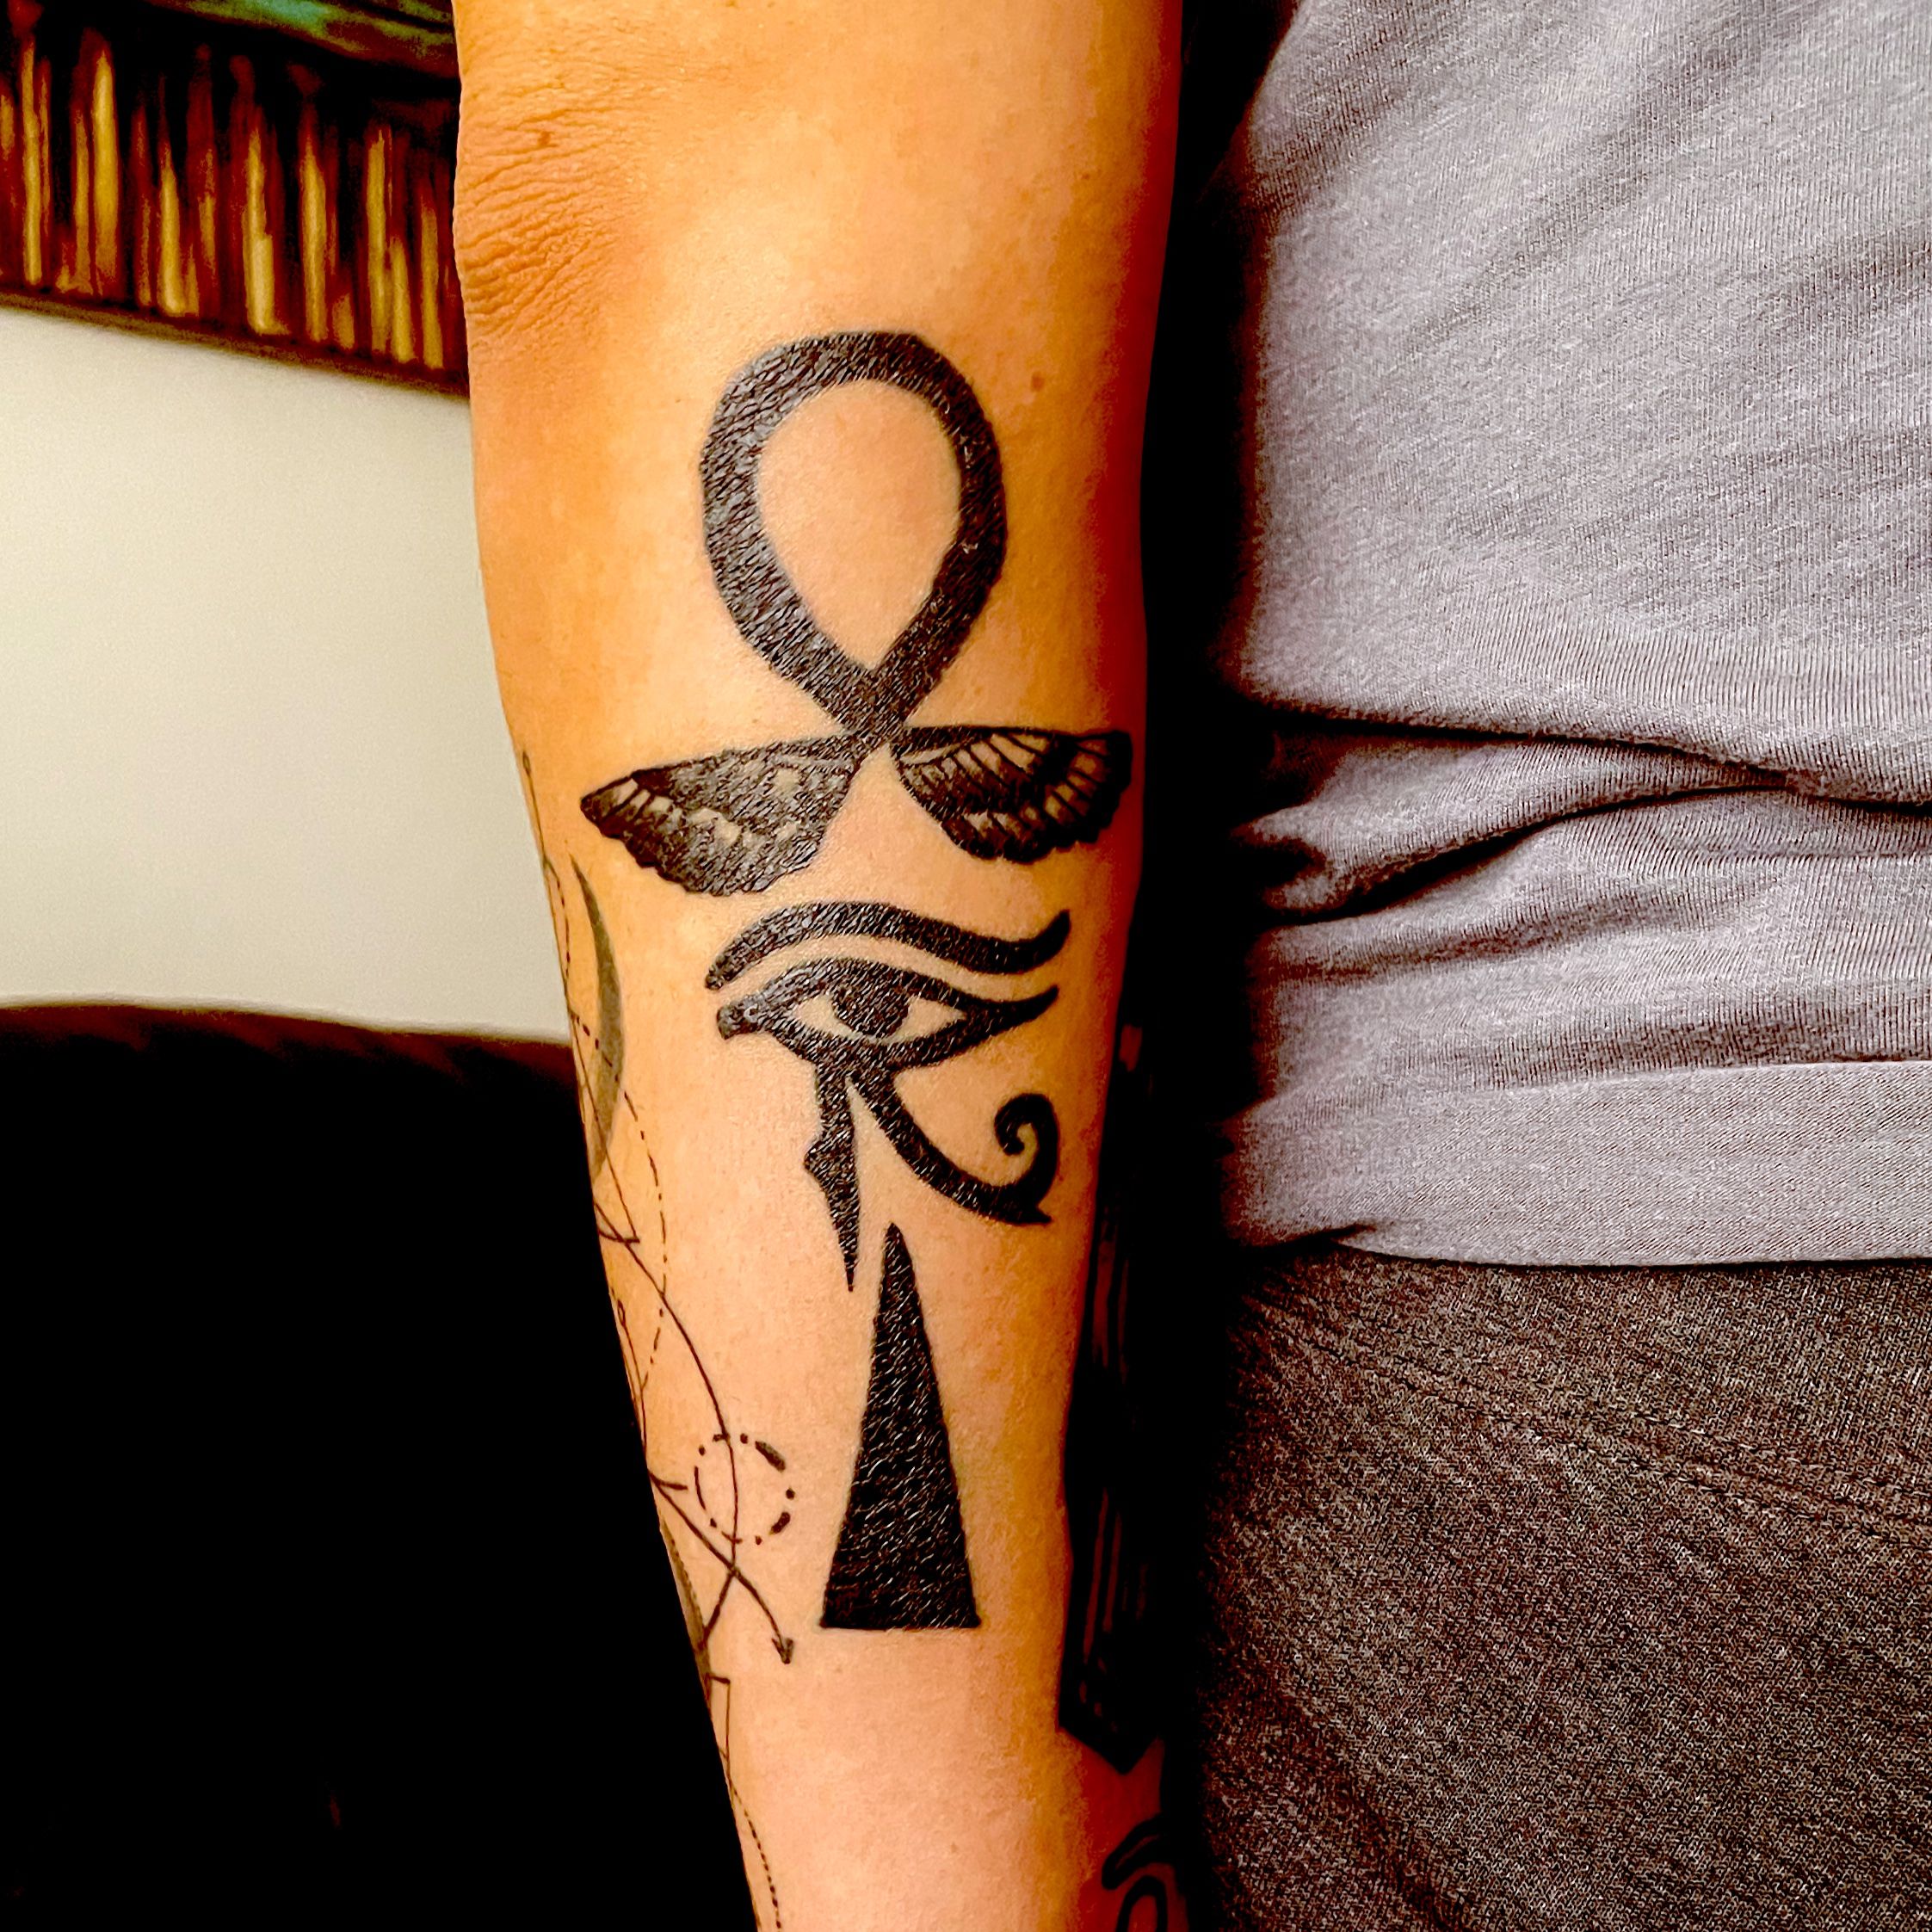 Tattoo symbols  The eye